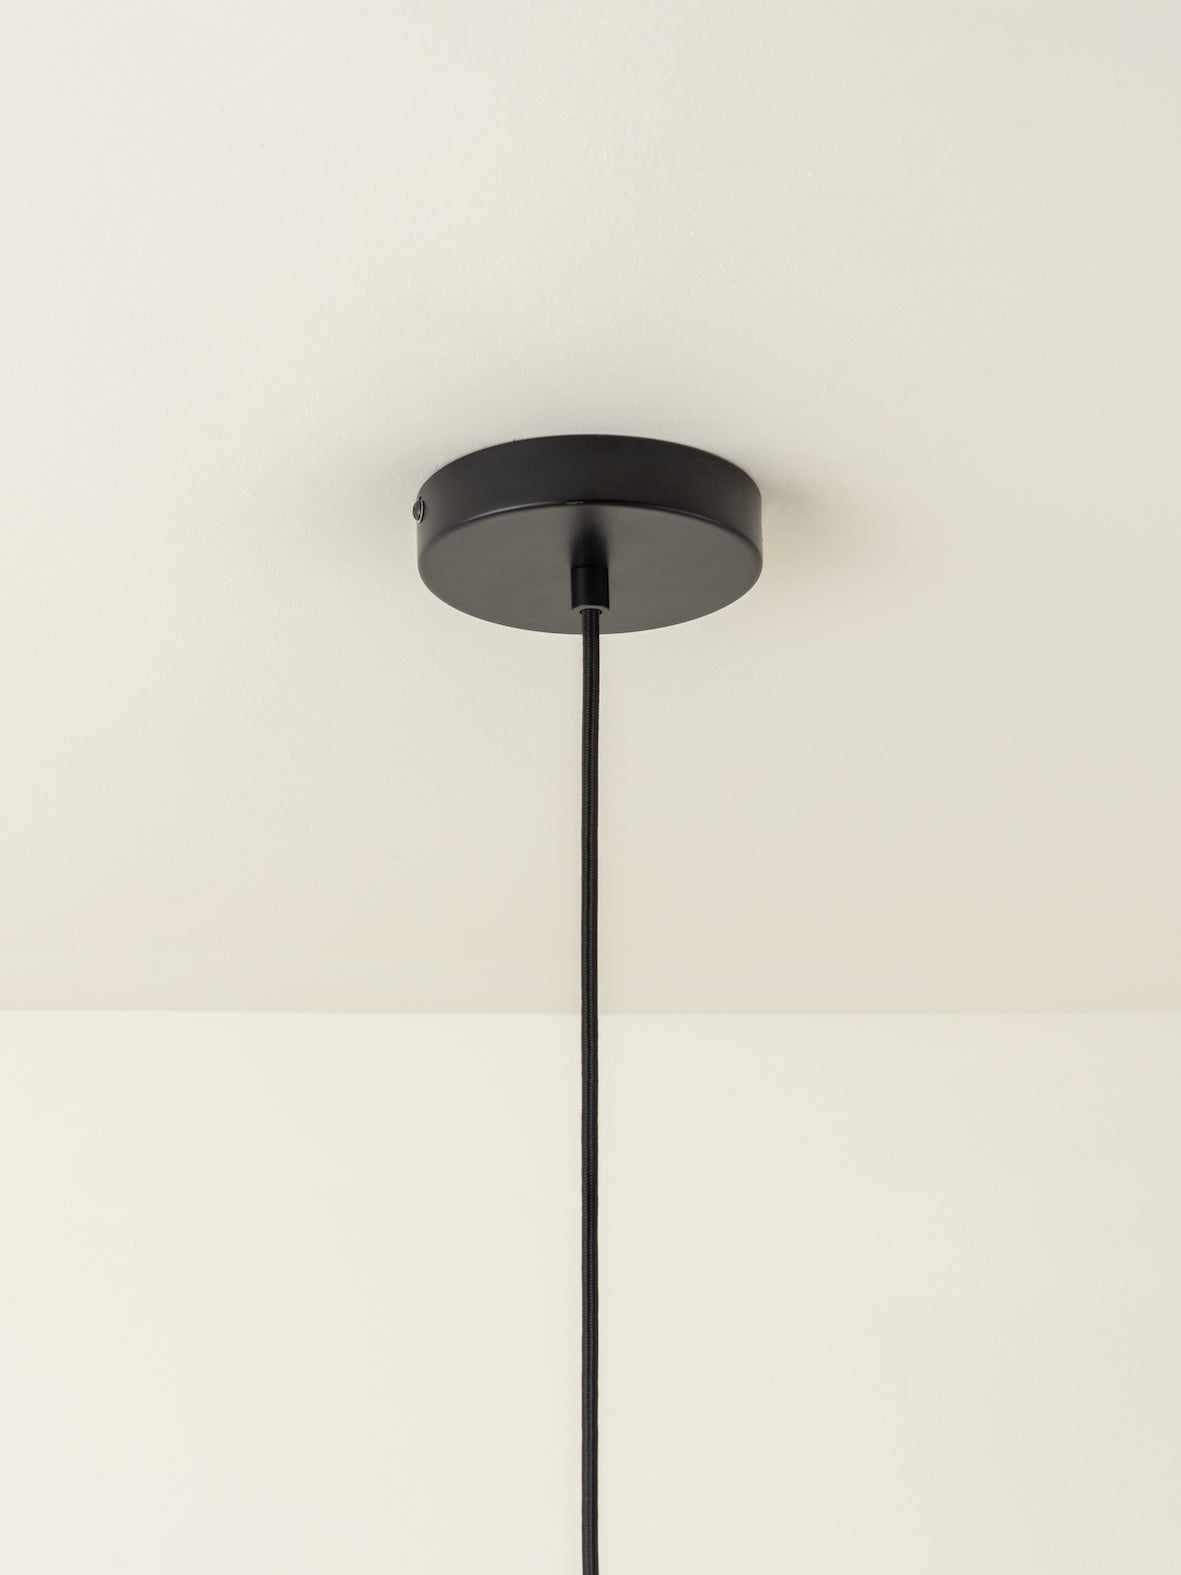 Silio - 1 light matt black and opal pendant | Ceiling Light | Lights & Lamps | UK